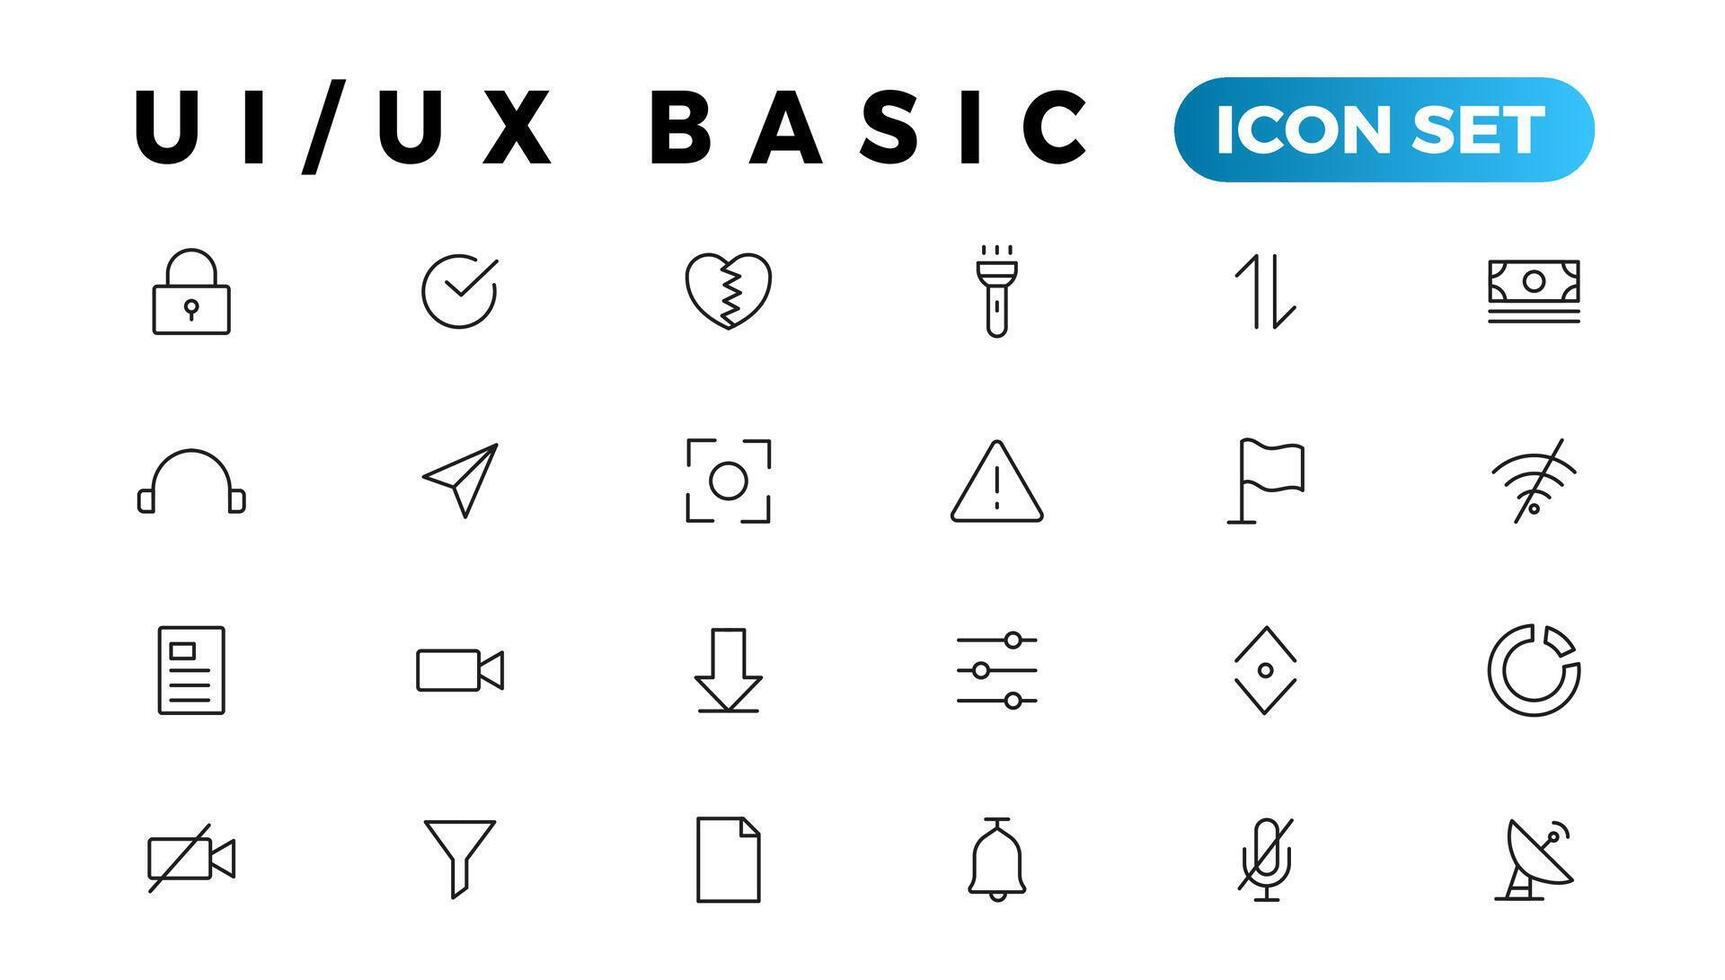 básico usuario interfaz esencial colocar. ui ux línea contorno iconos para aplicación, web, impresión. editable ataque. vector